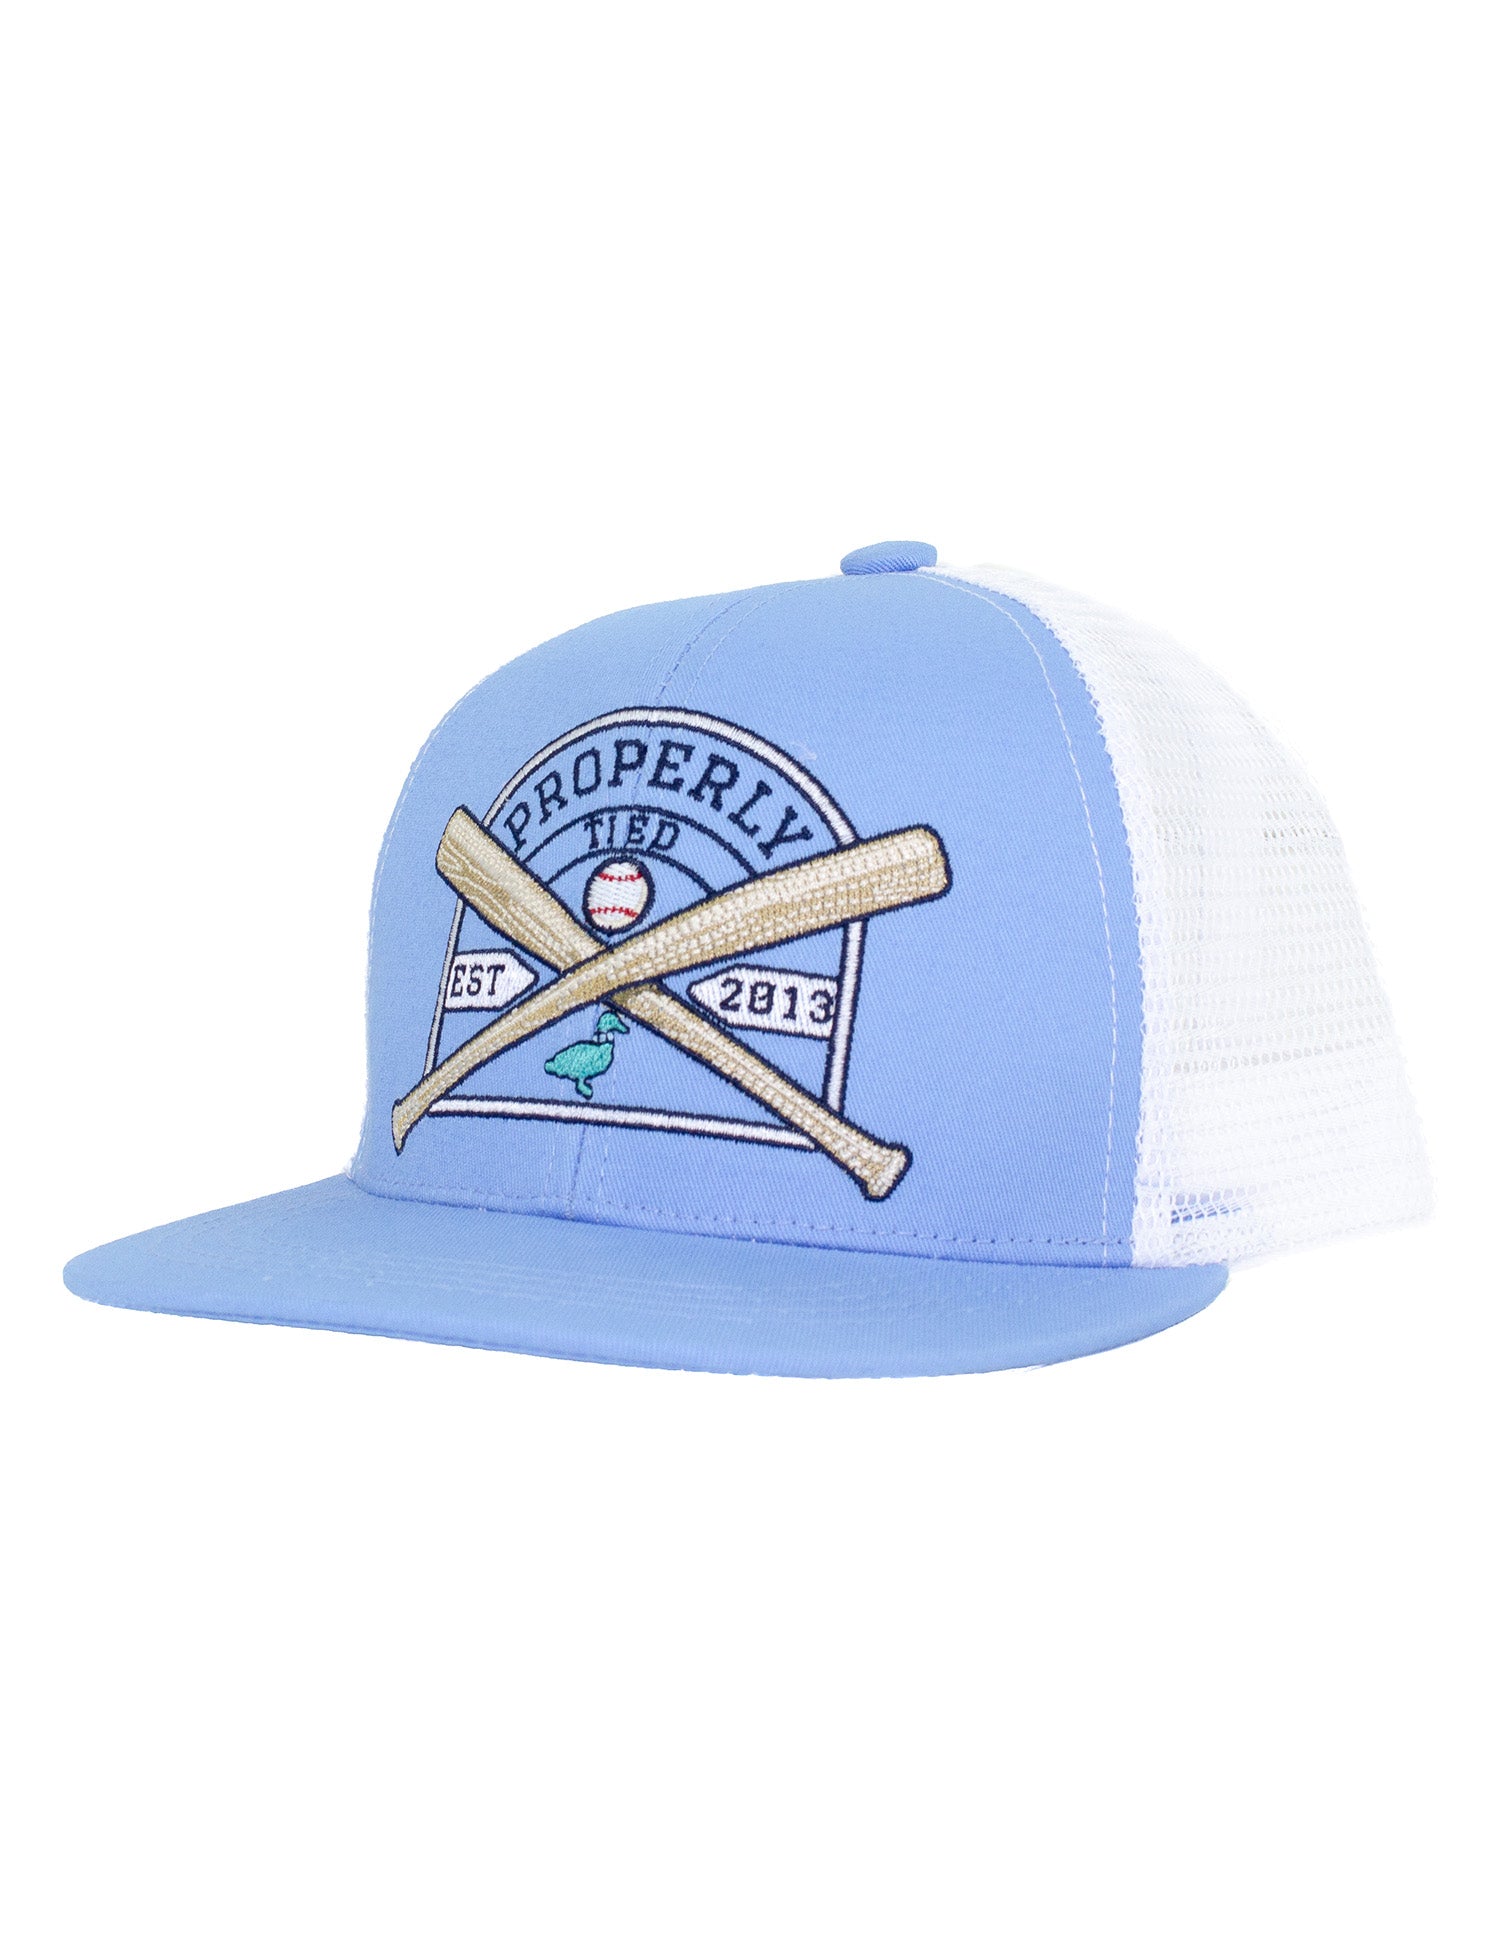 Boys Trucker Hat Baseball Shield